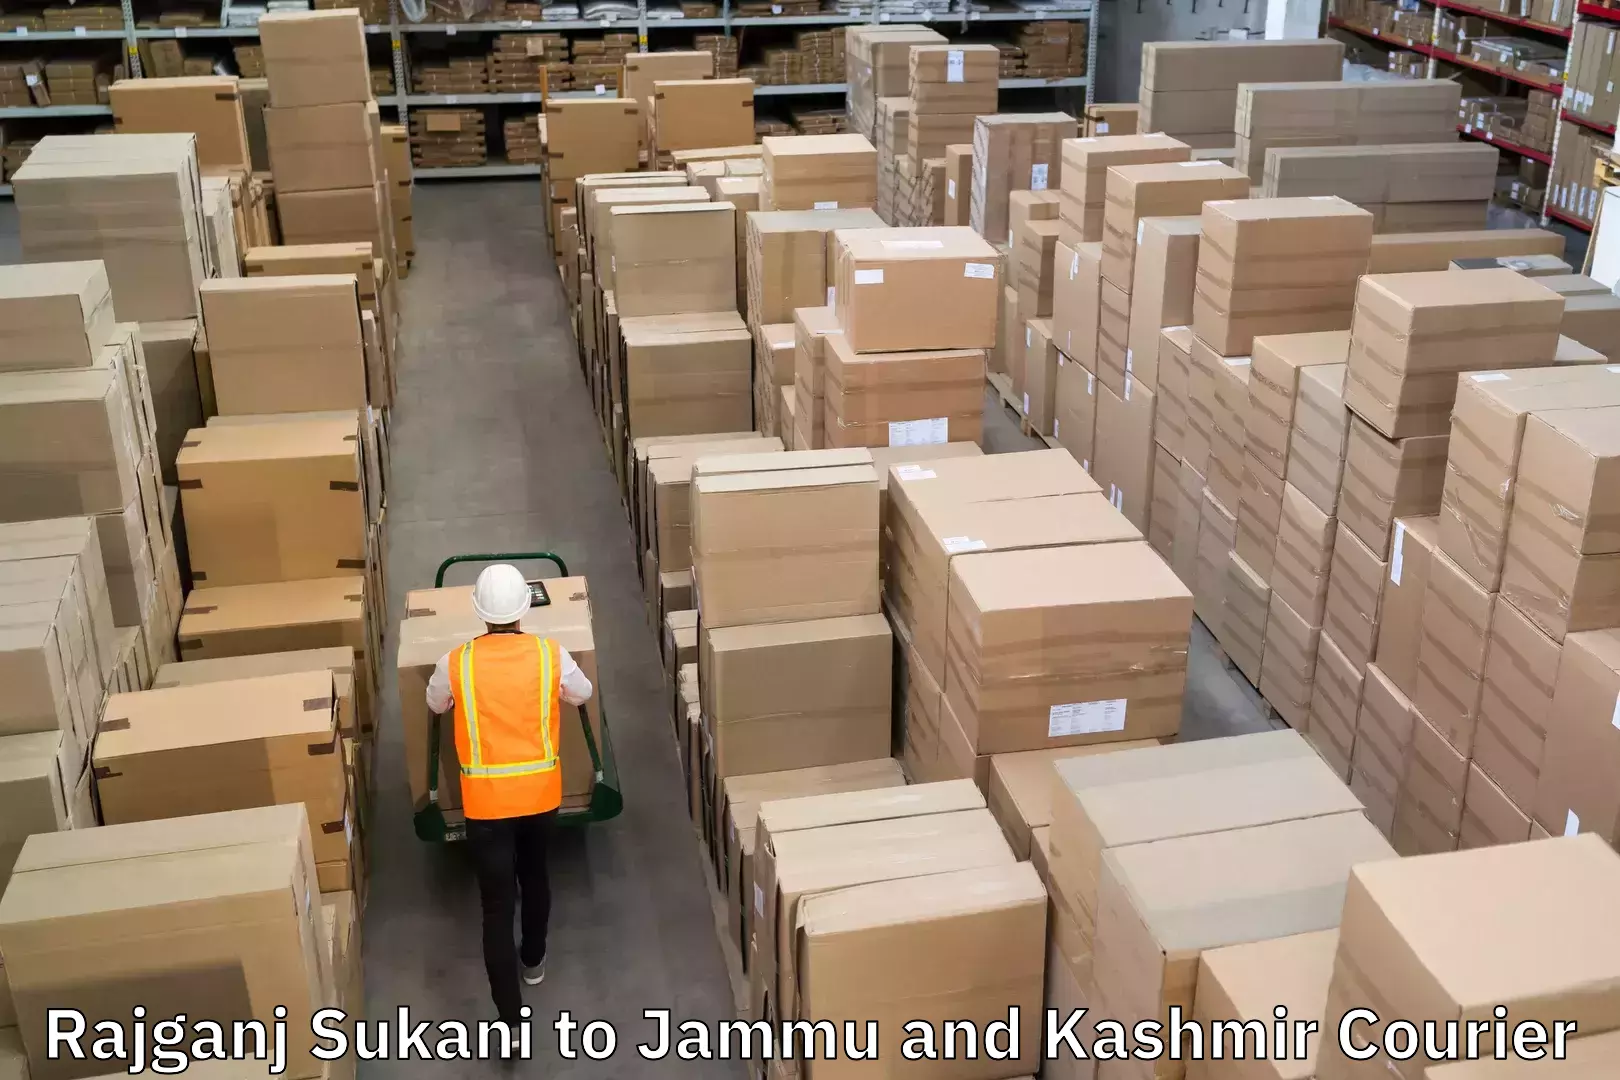 Courier service innovation Rajganj Sukani to Jammu and Kashmir